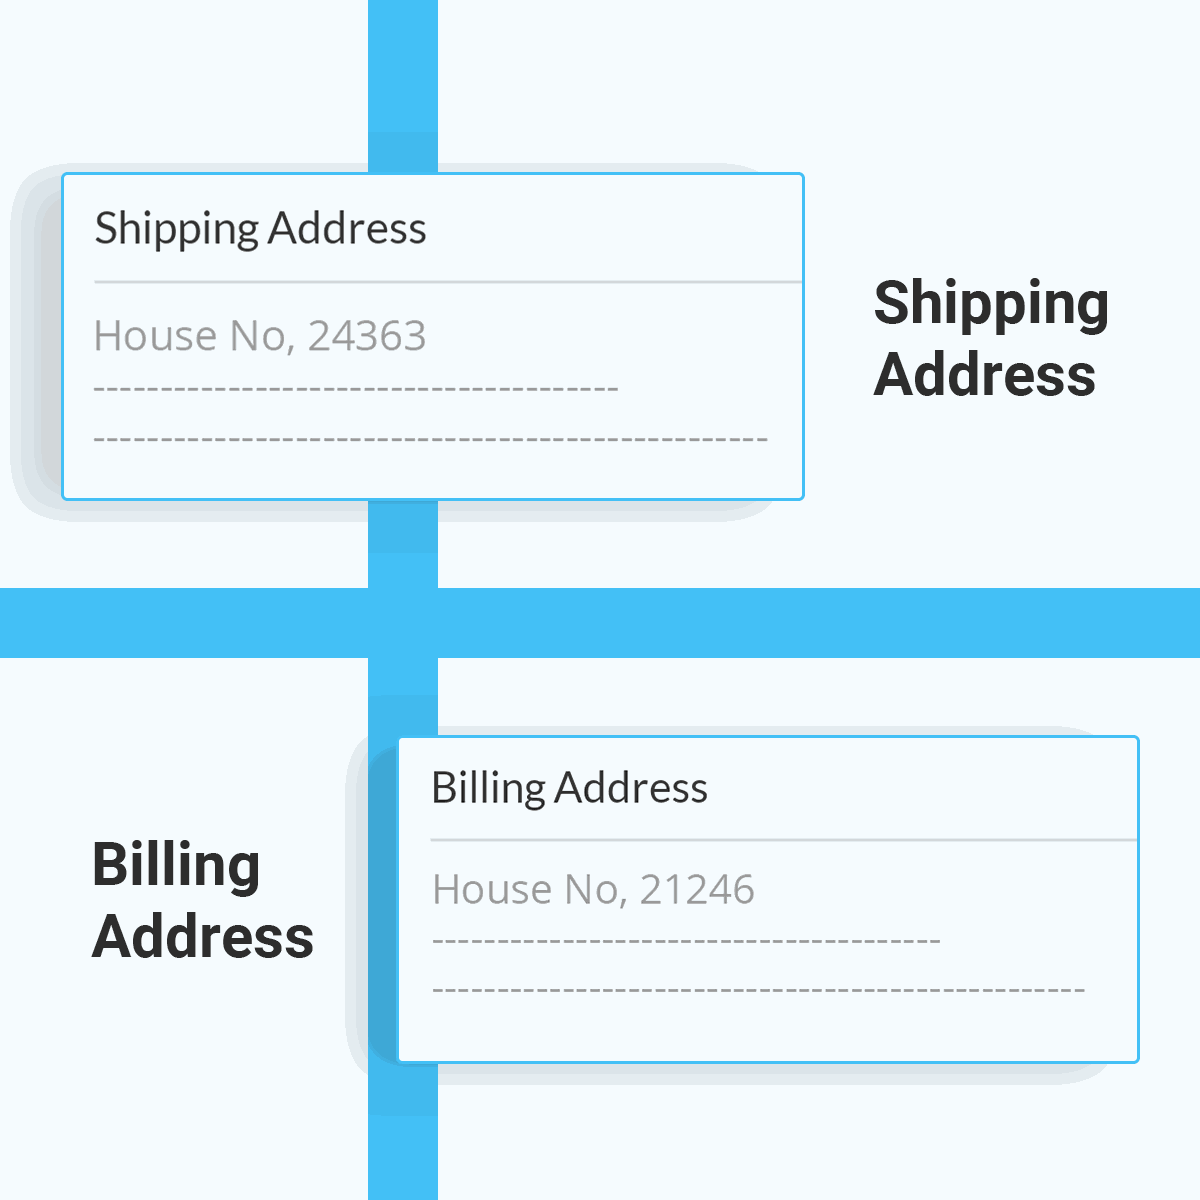 Shipping Address